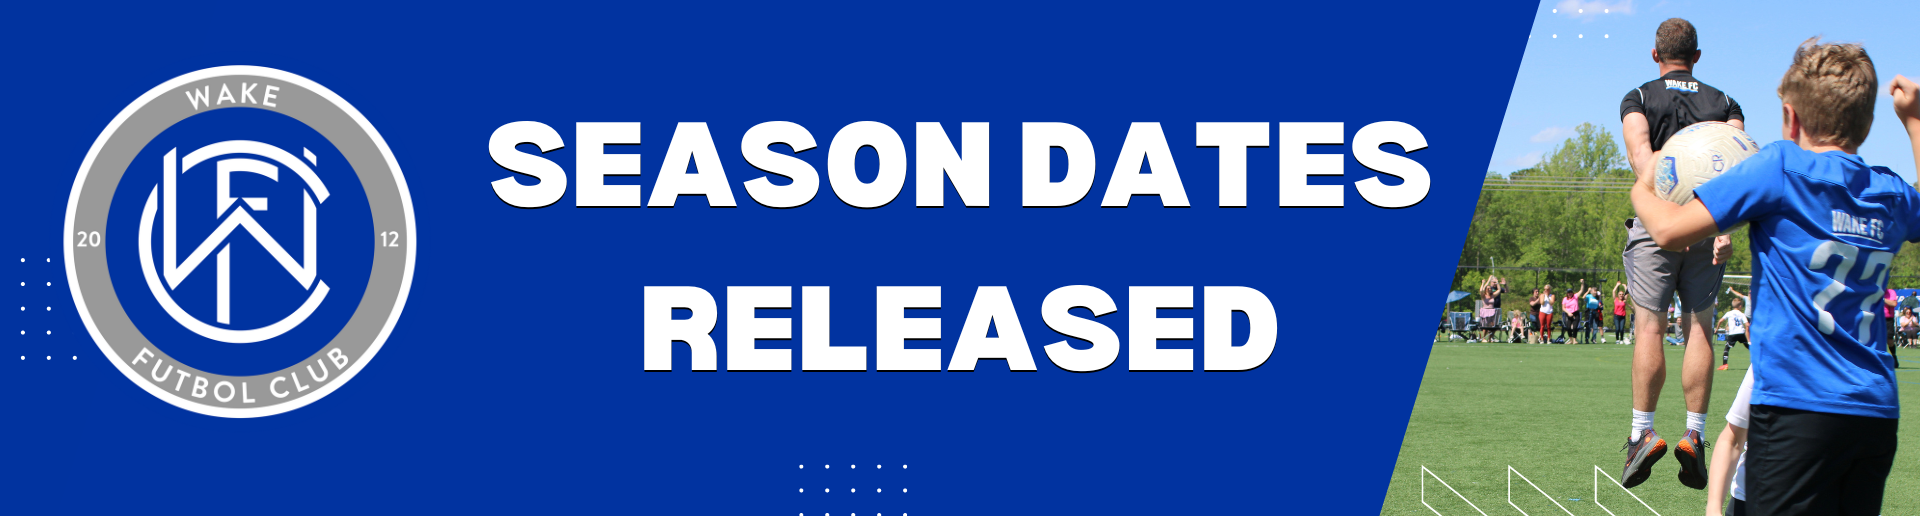 23/24 Season Dates Released